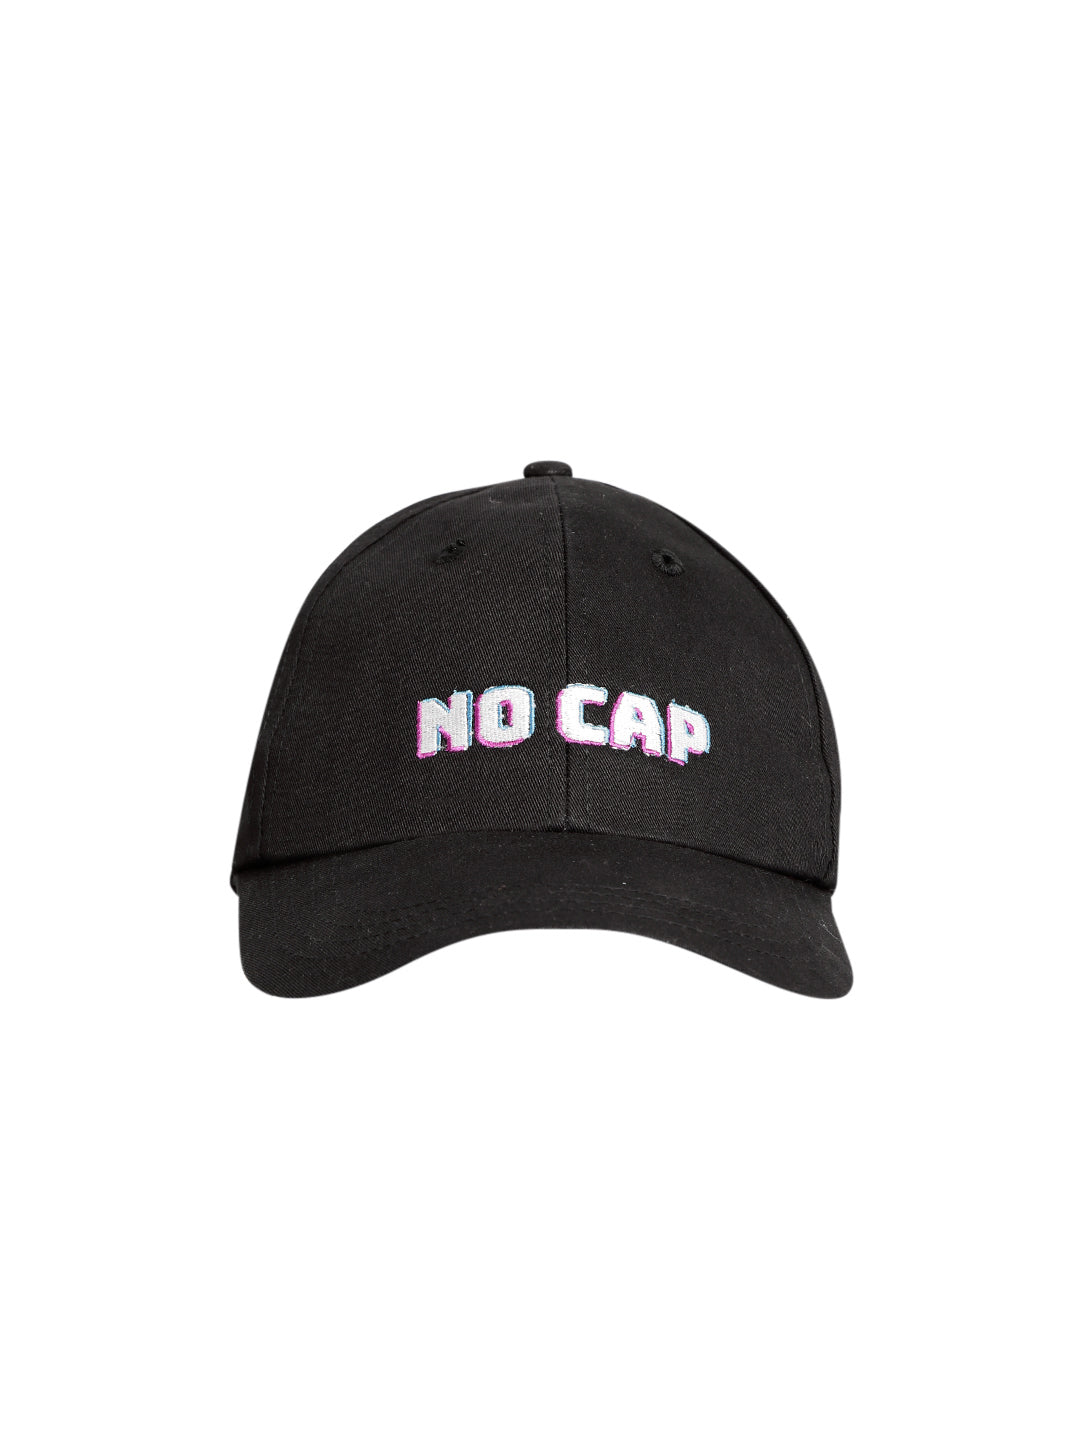 Blueberry NO CAP embroidery black baseball cap